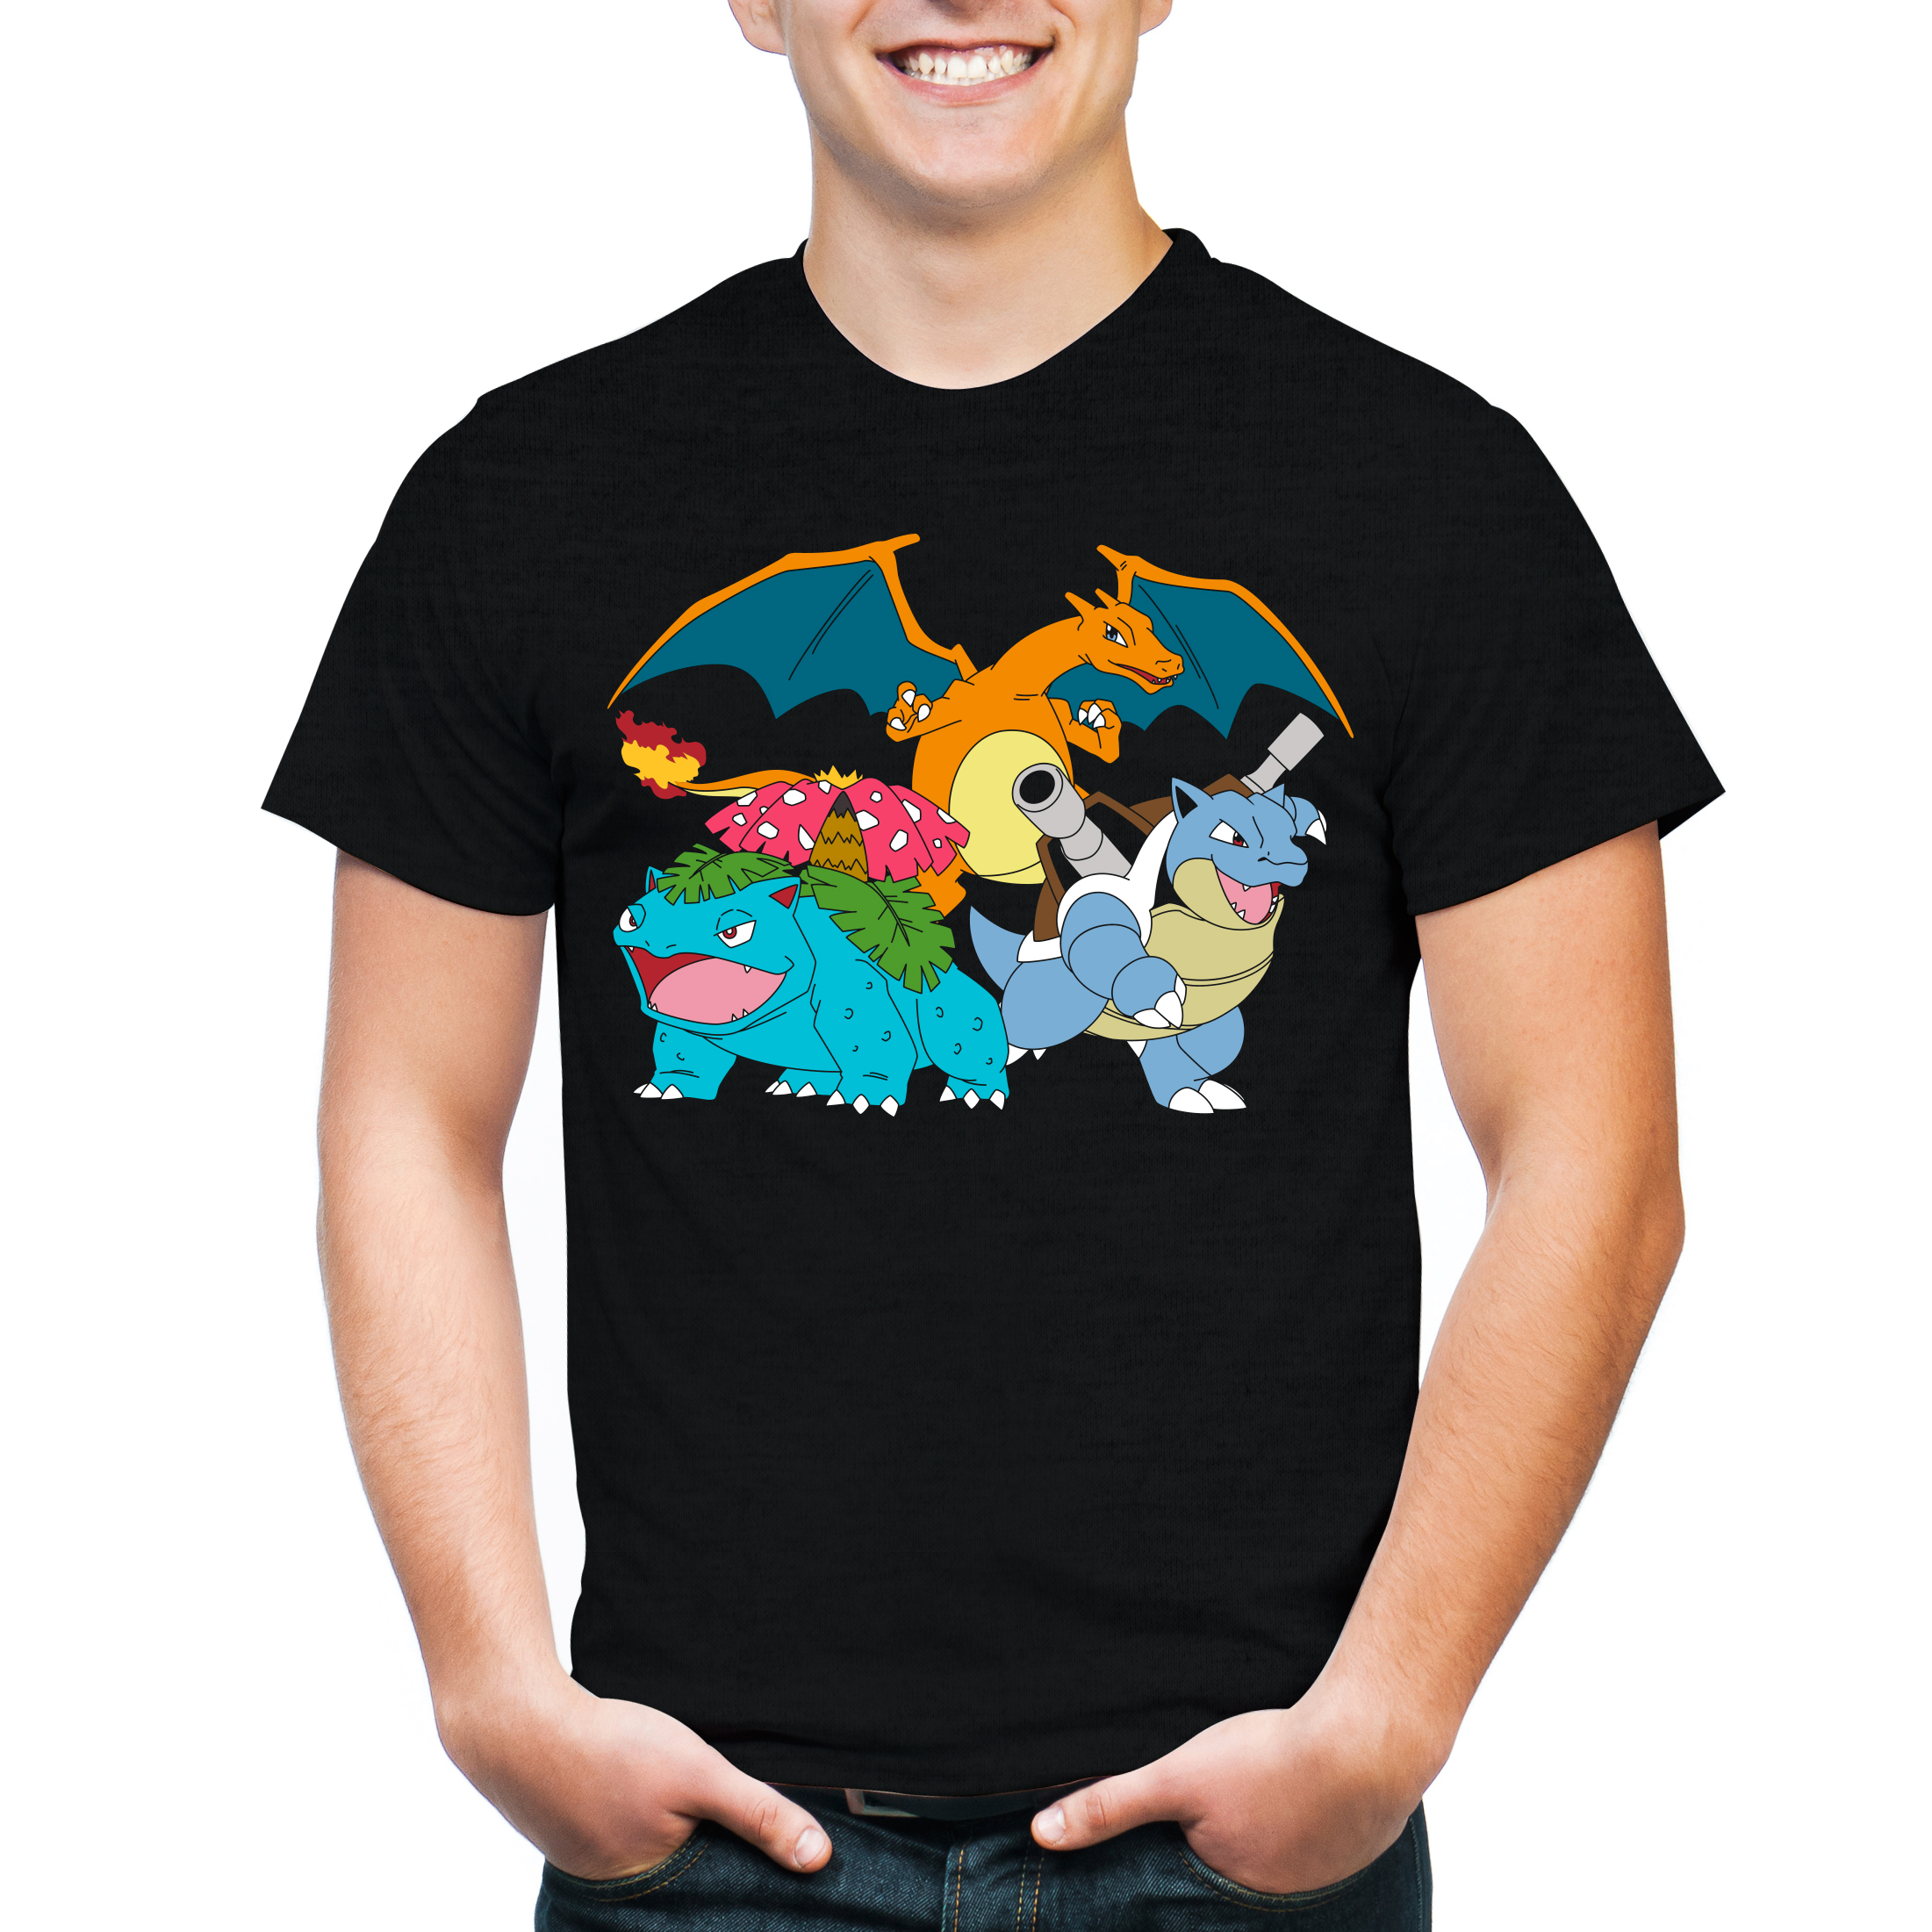 Freeze Pokemon Charizard, Venusaur, and Blastoise Men's Short Sleeve Graphic Tee T-Shirt